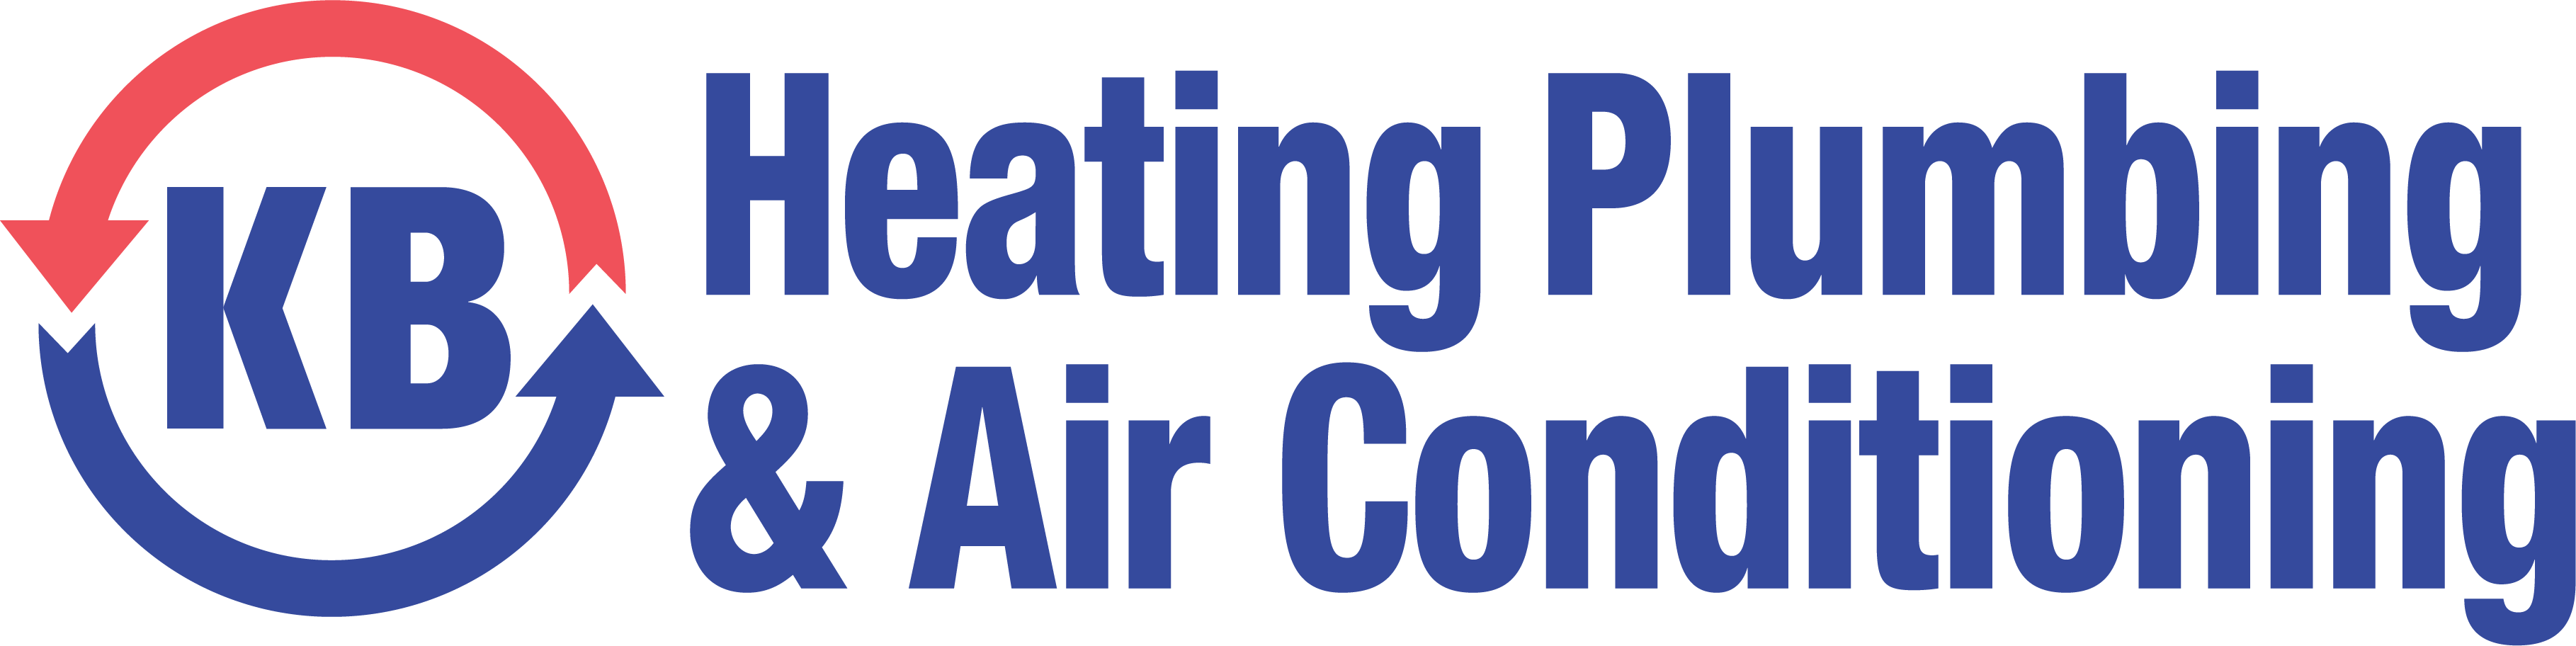 kb heating & air conditioning logo